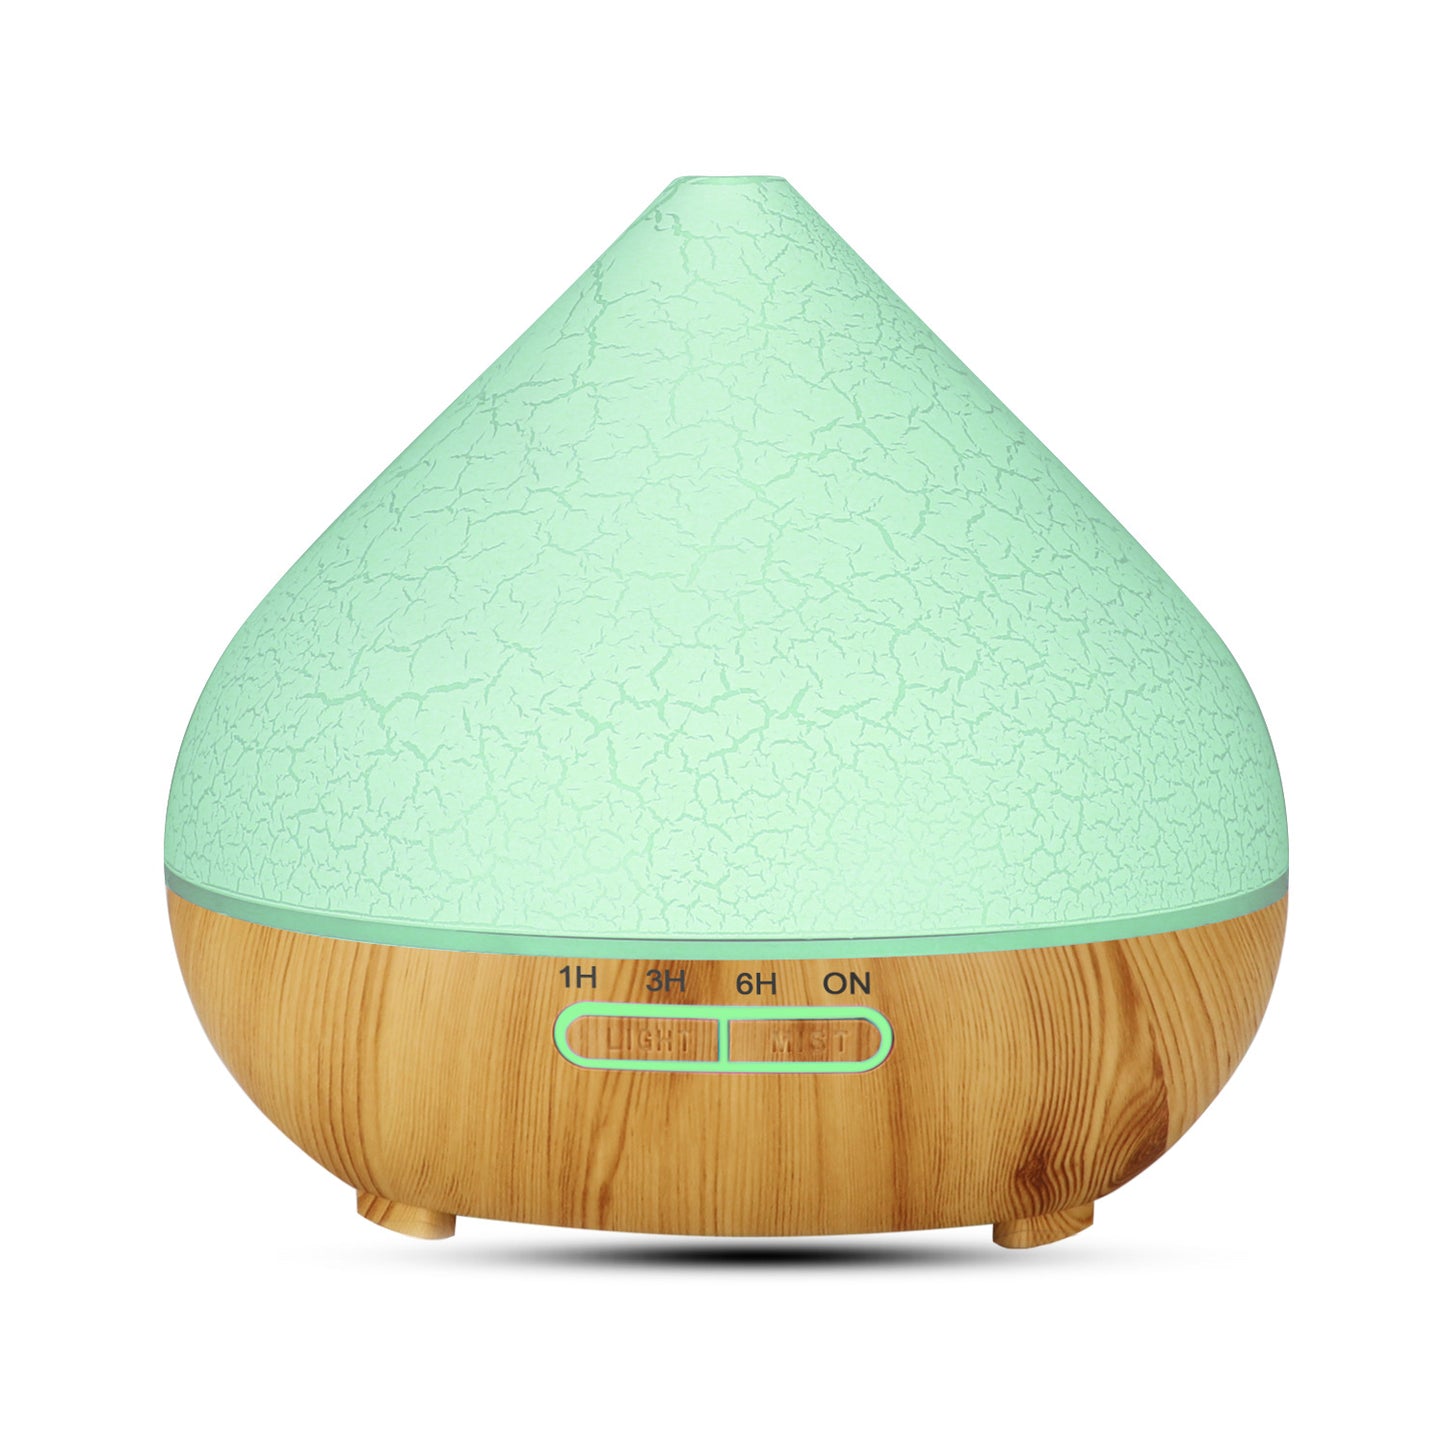 Crackle Volcano Humidifier Colorful Diffuser Aroma Diffuser